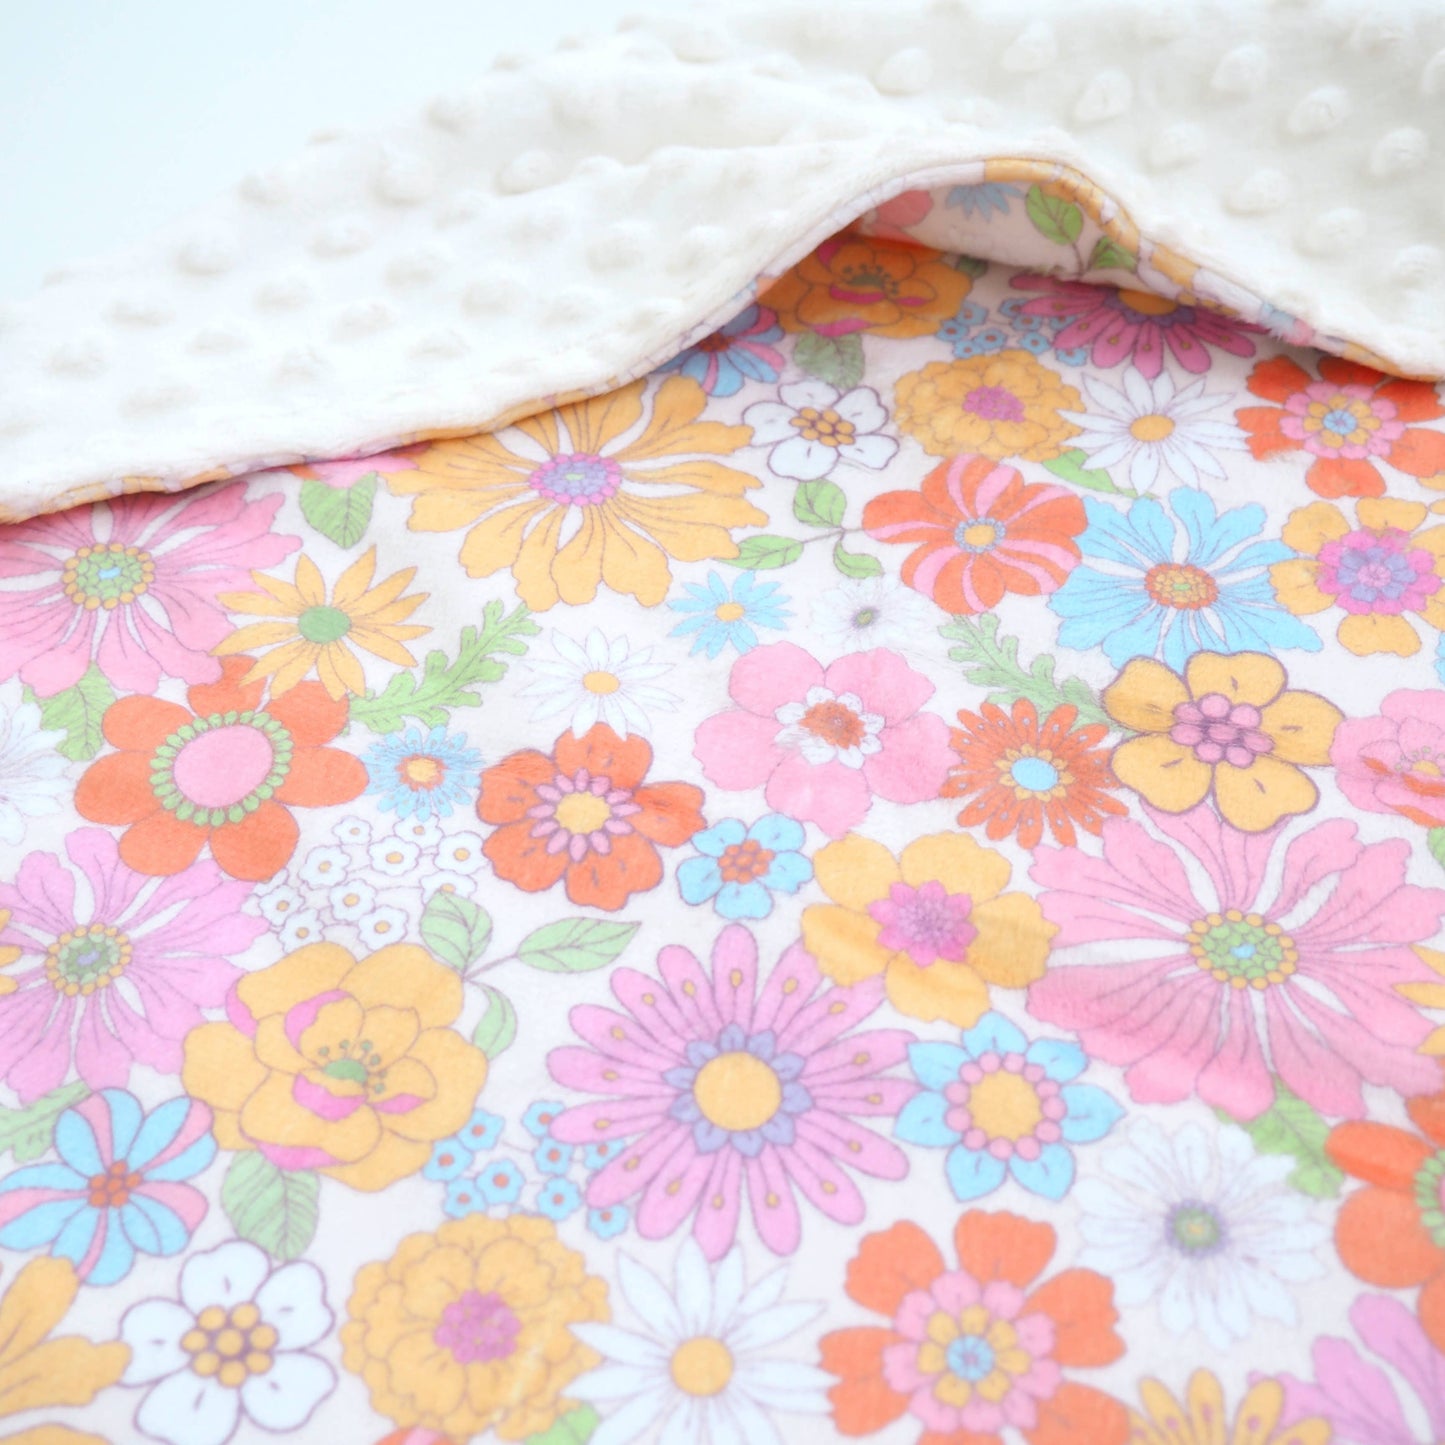 Minky Blanket - Retro Floral